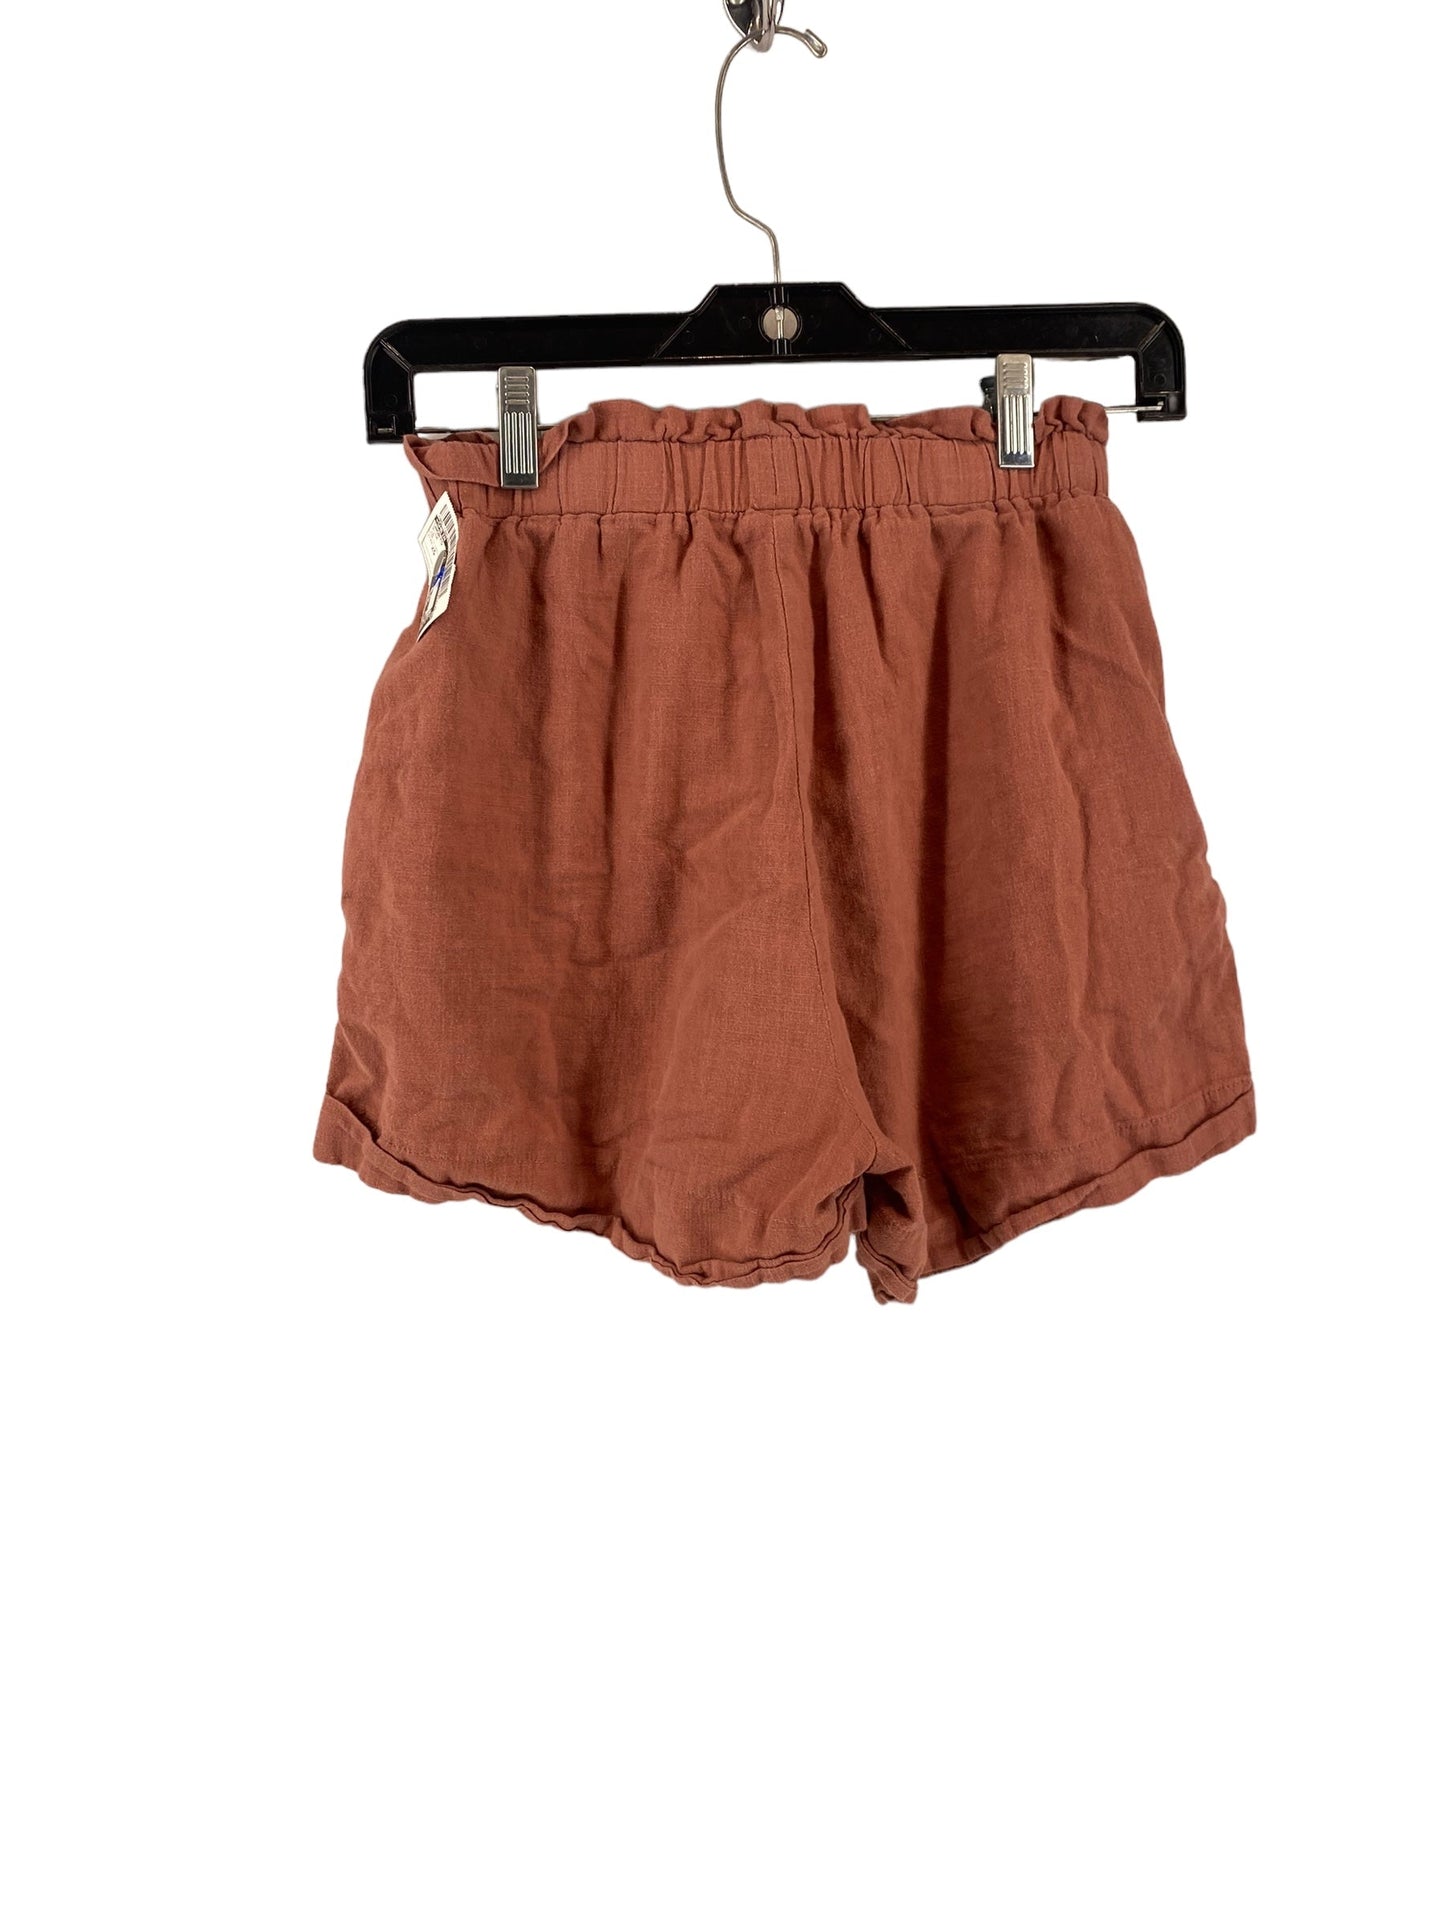 Shorts By Shein  Size: Xs